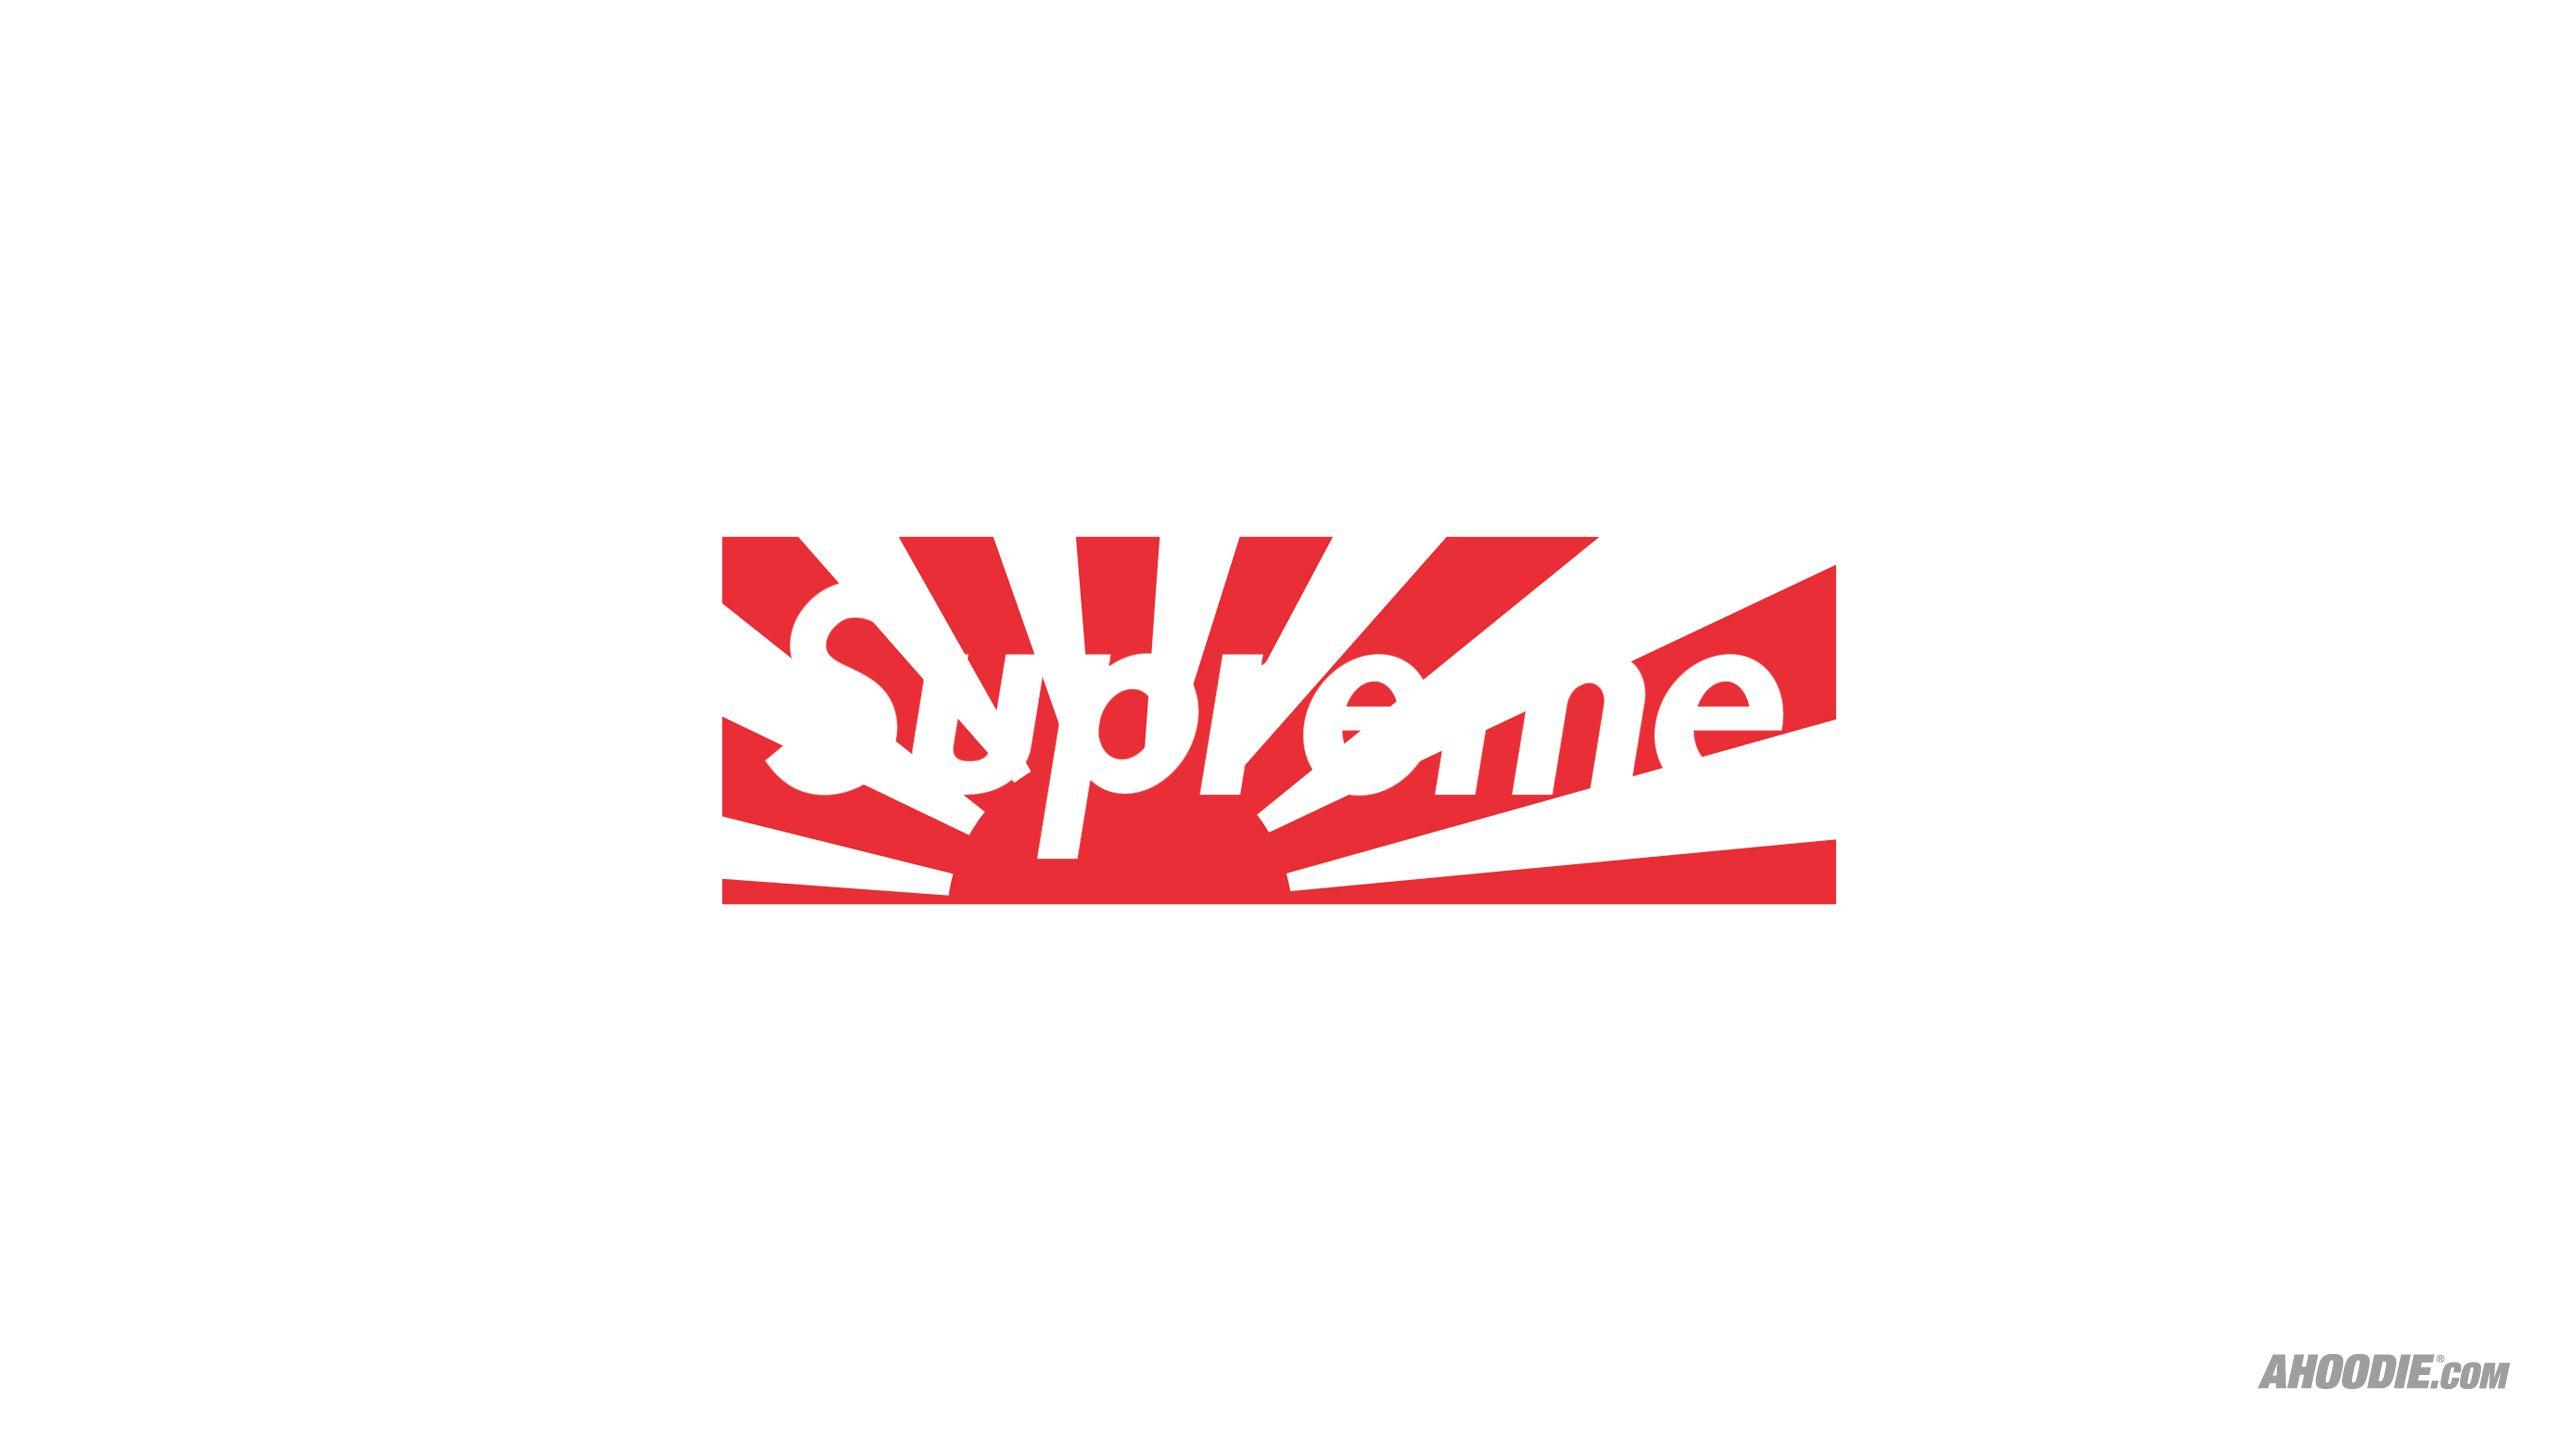 logo, clothes, supreme, brand HD Wallpaper